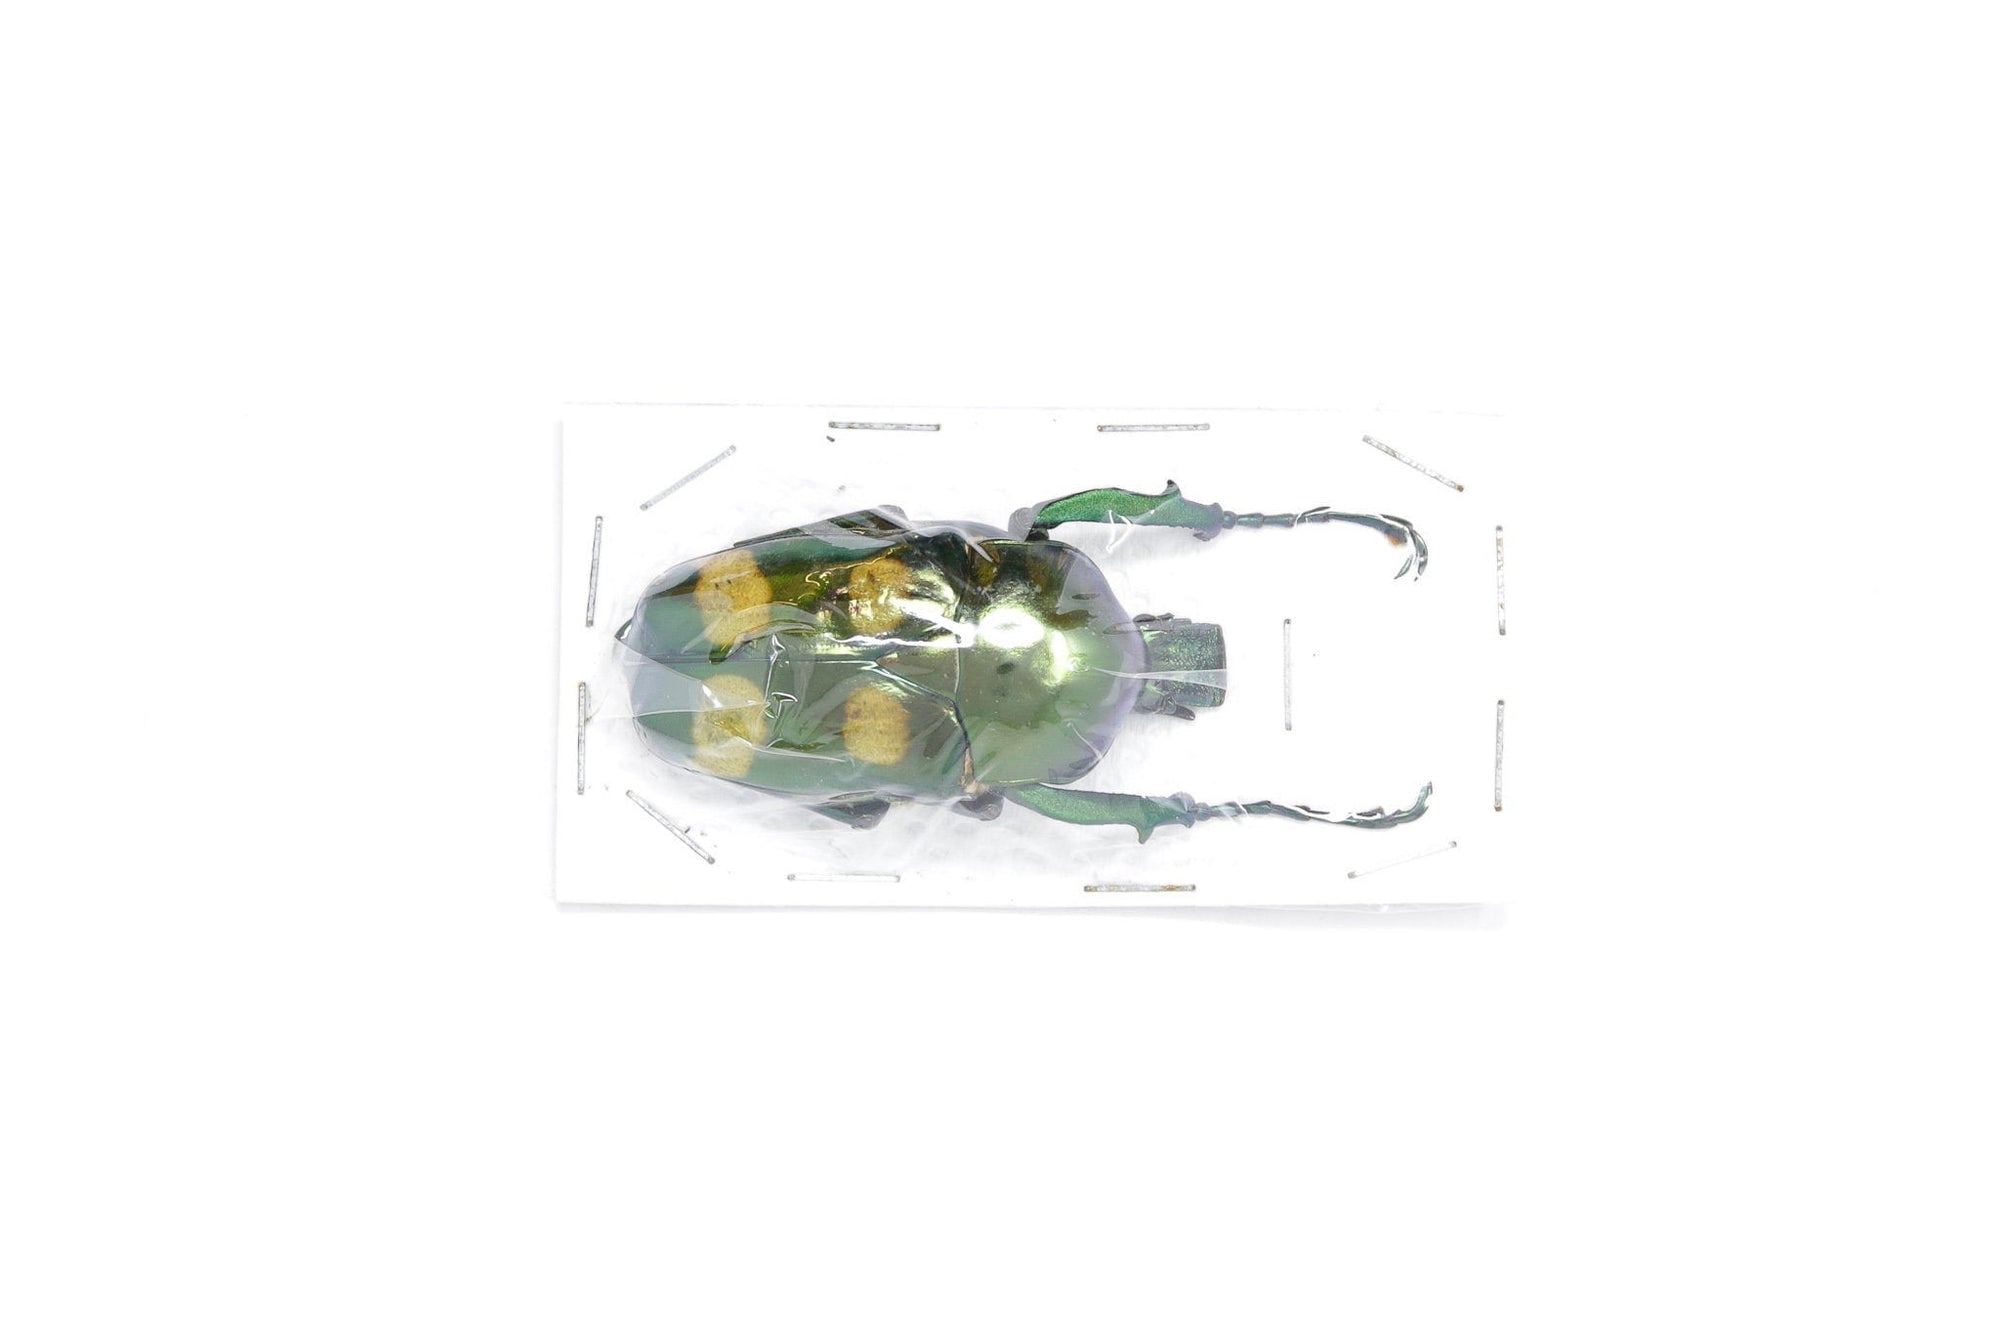 Jumnos ruckeri ruckeri 50.5mm A1 | Thailand Green Flower Beetle, Entomology Specimen